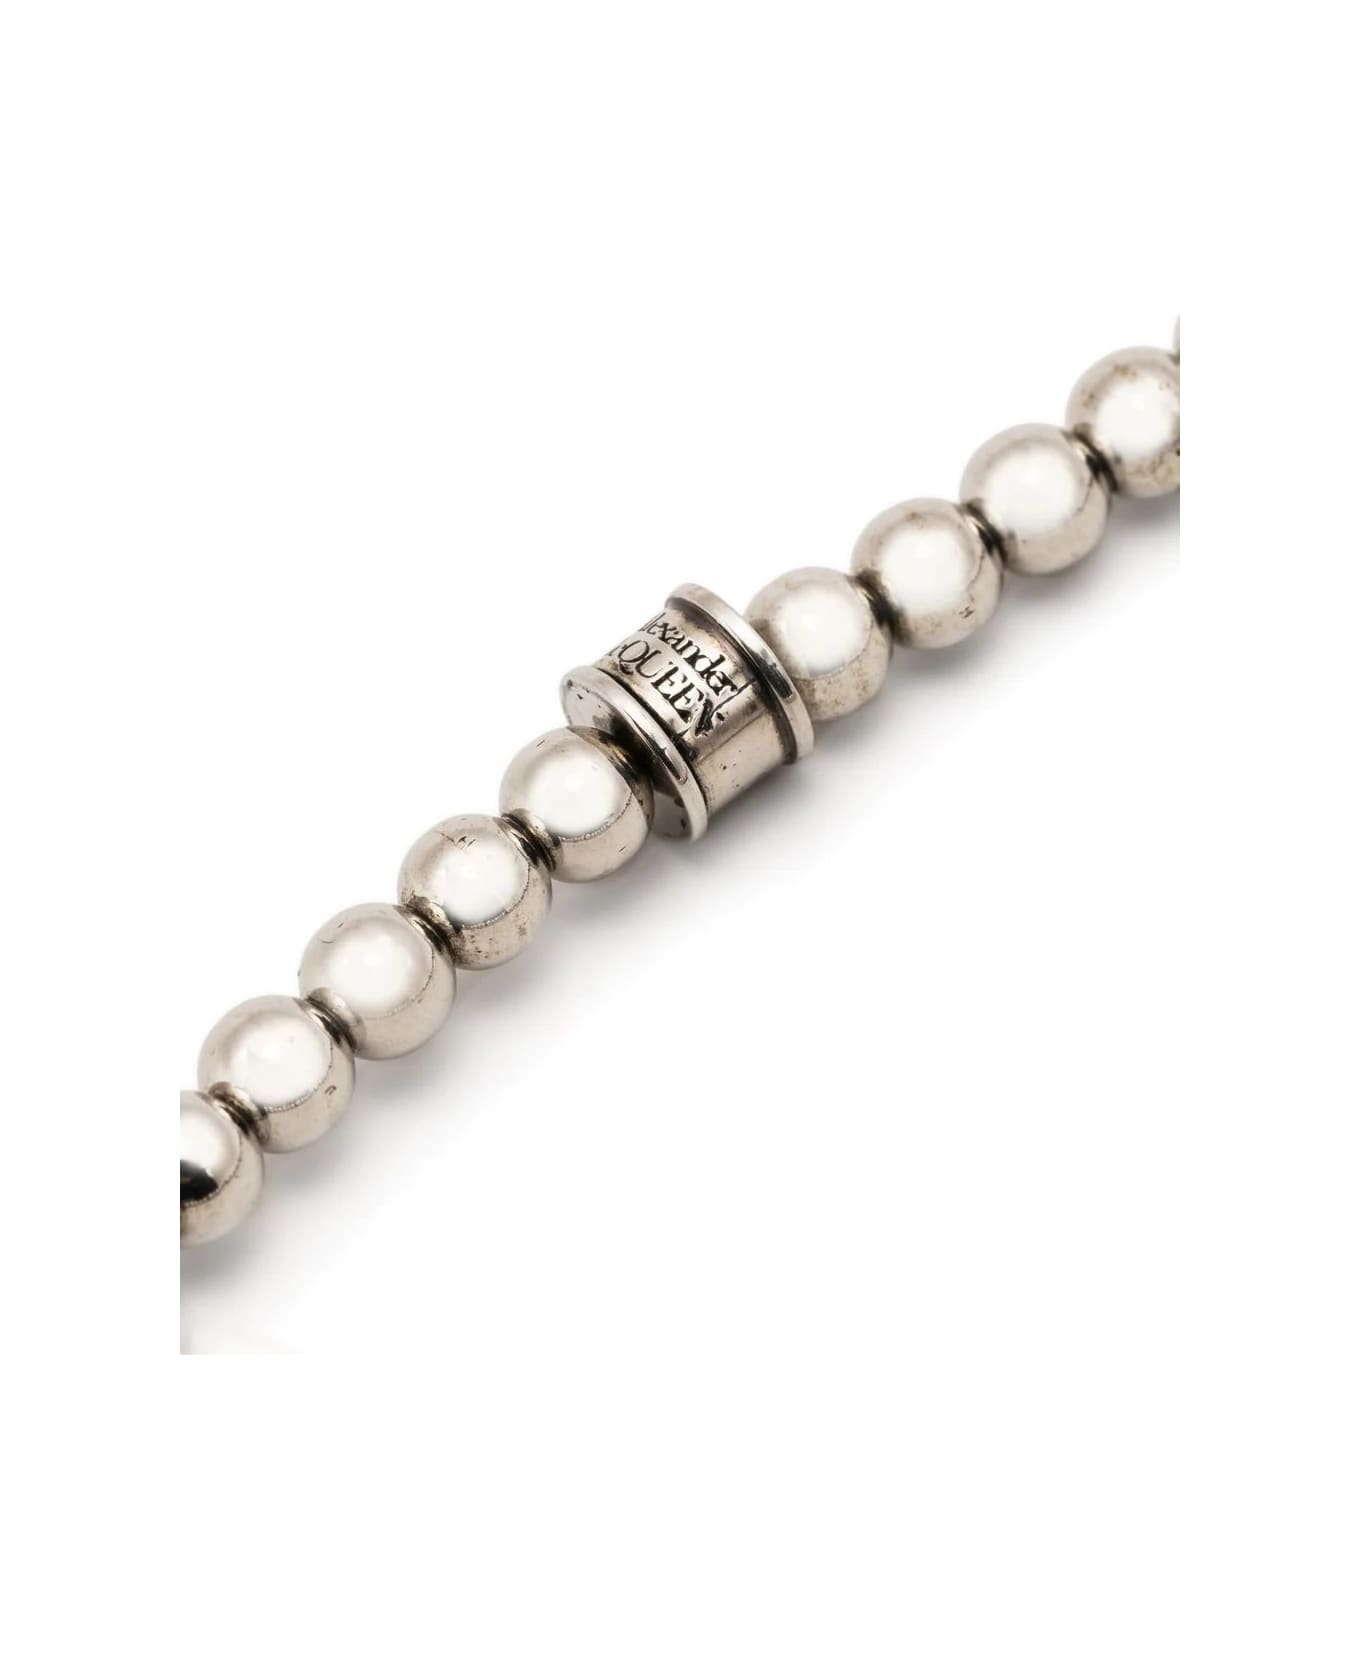 Alexander McQueen Skull Beads Bracelet In Antiqued Silver - Silver